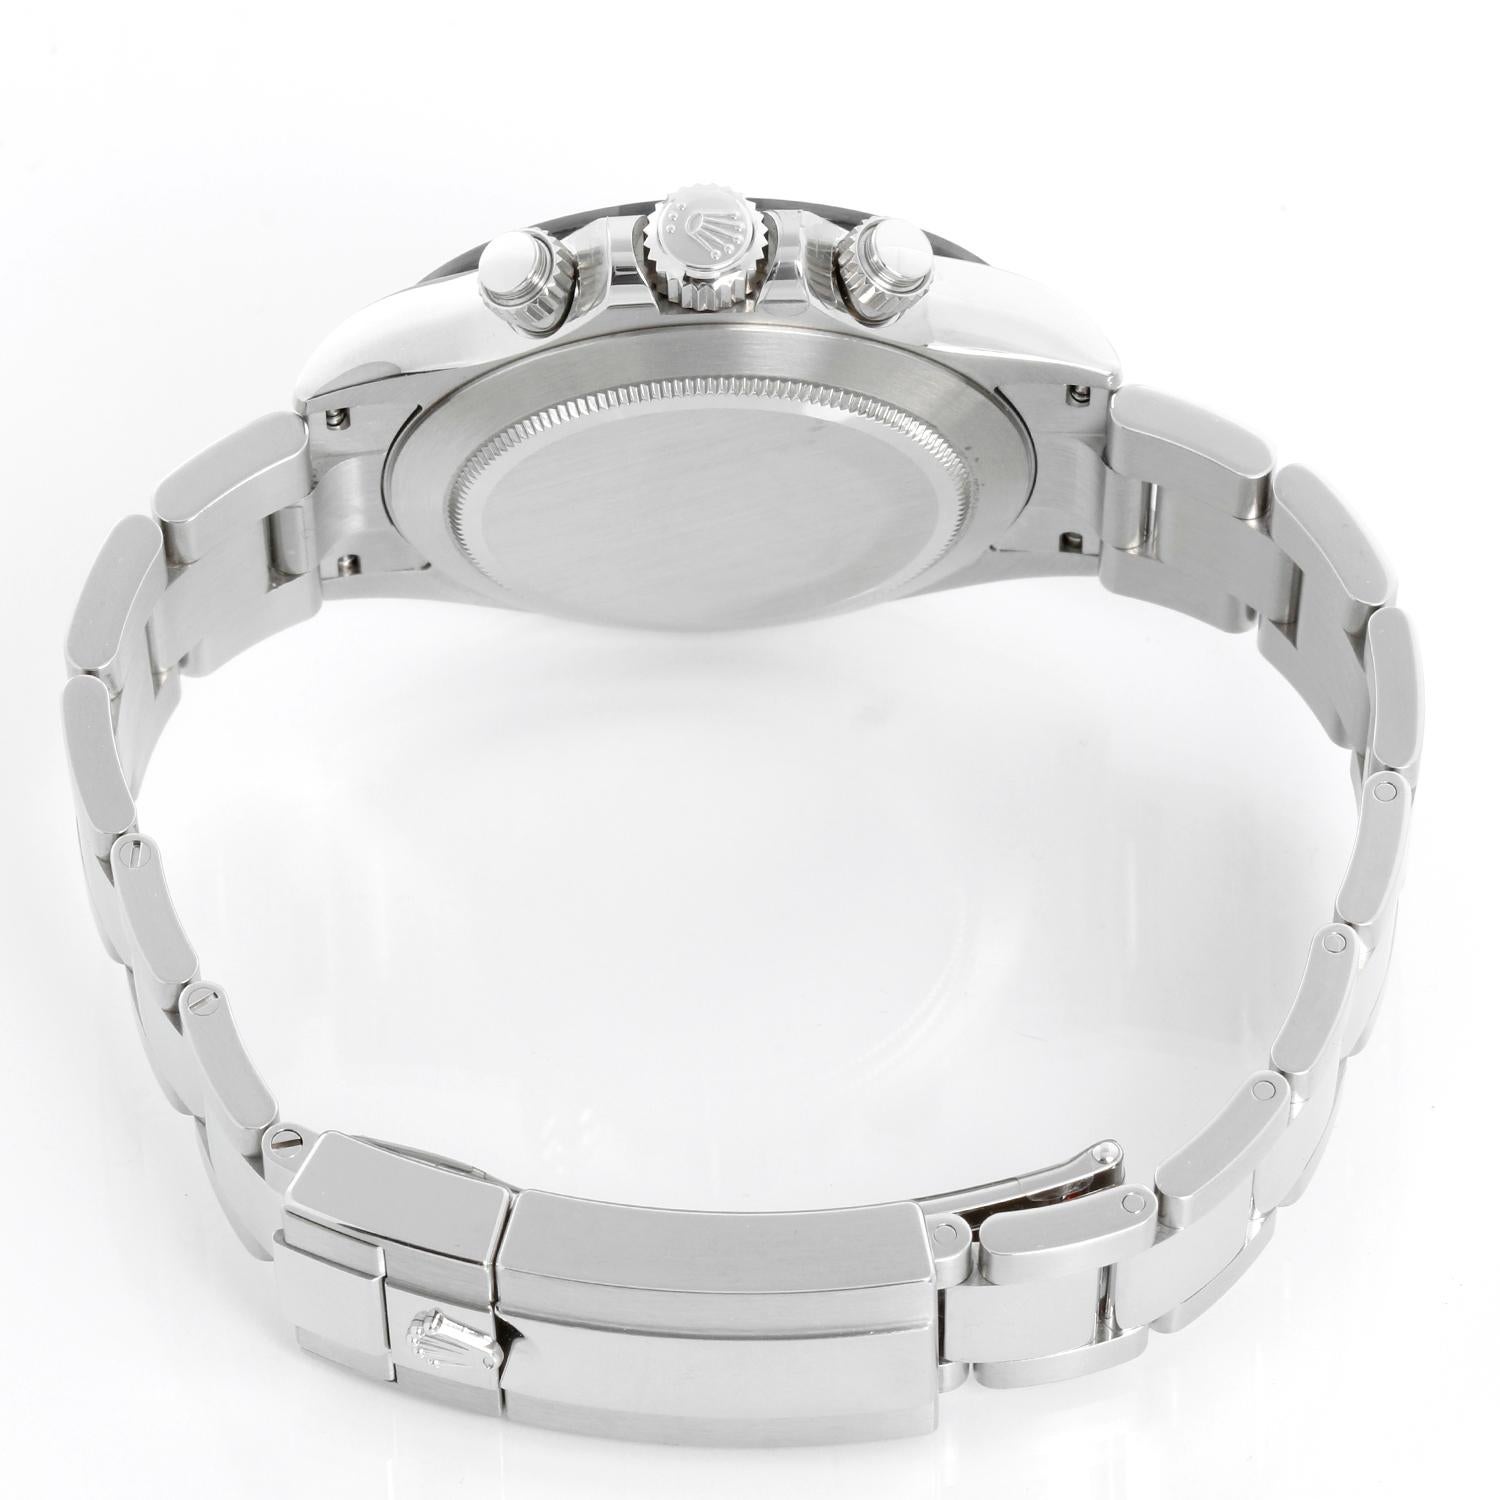 Men's Rolex Ceramic White dial Cosmograph Daytona 116500LN For Sale